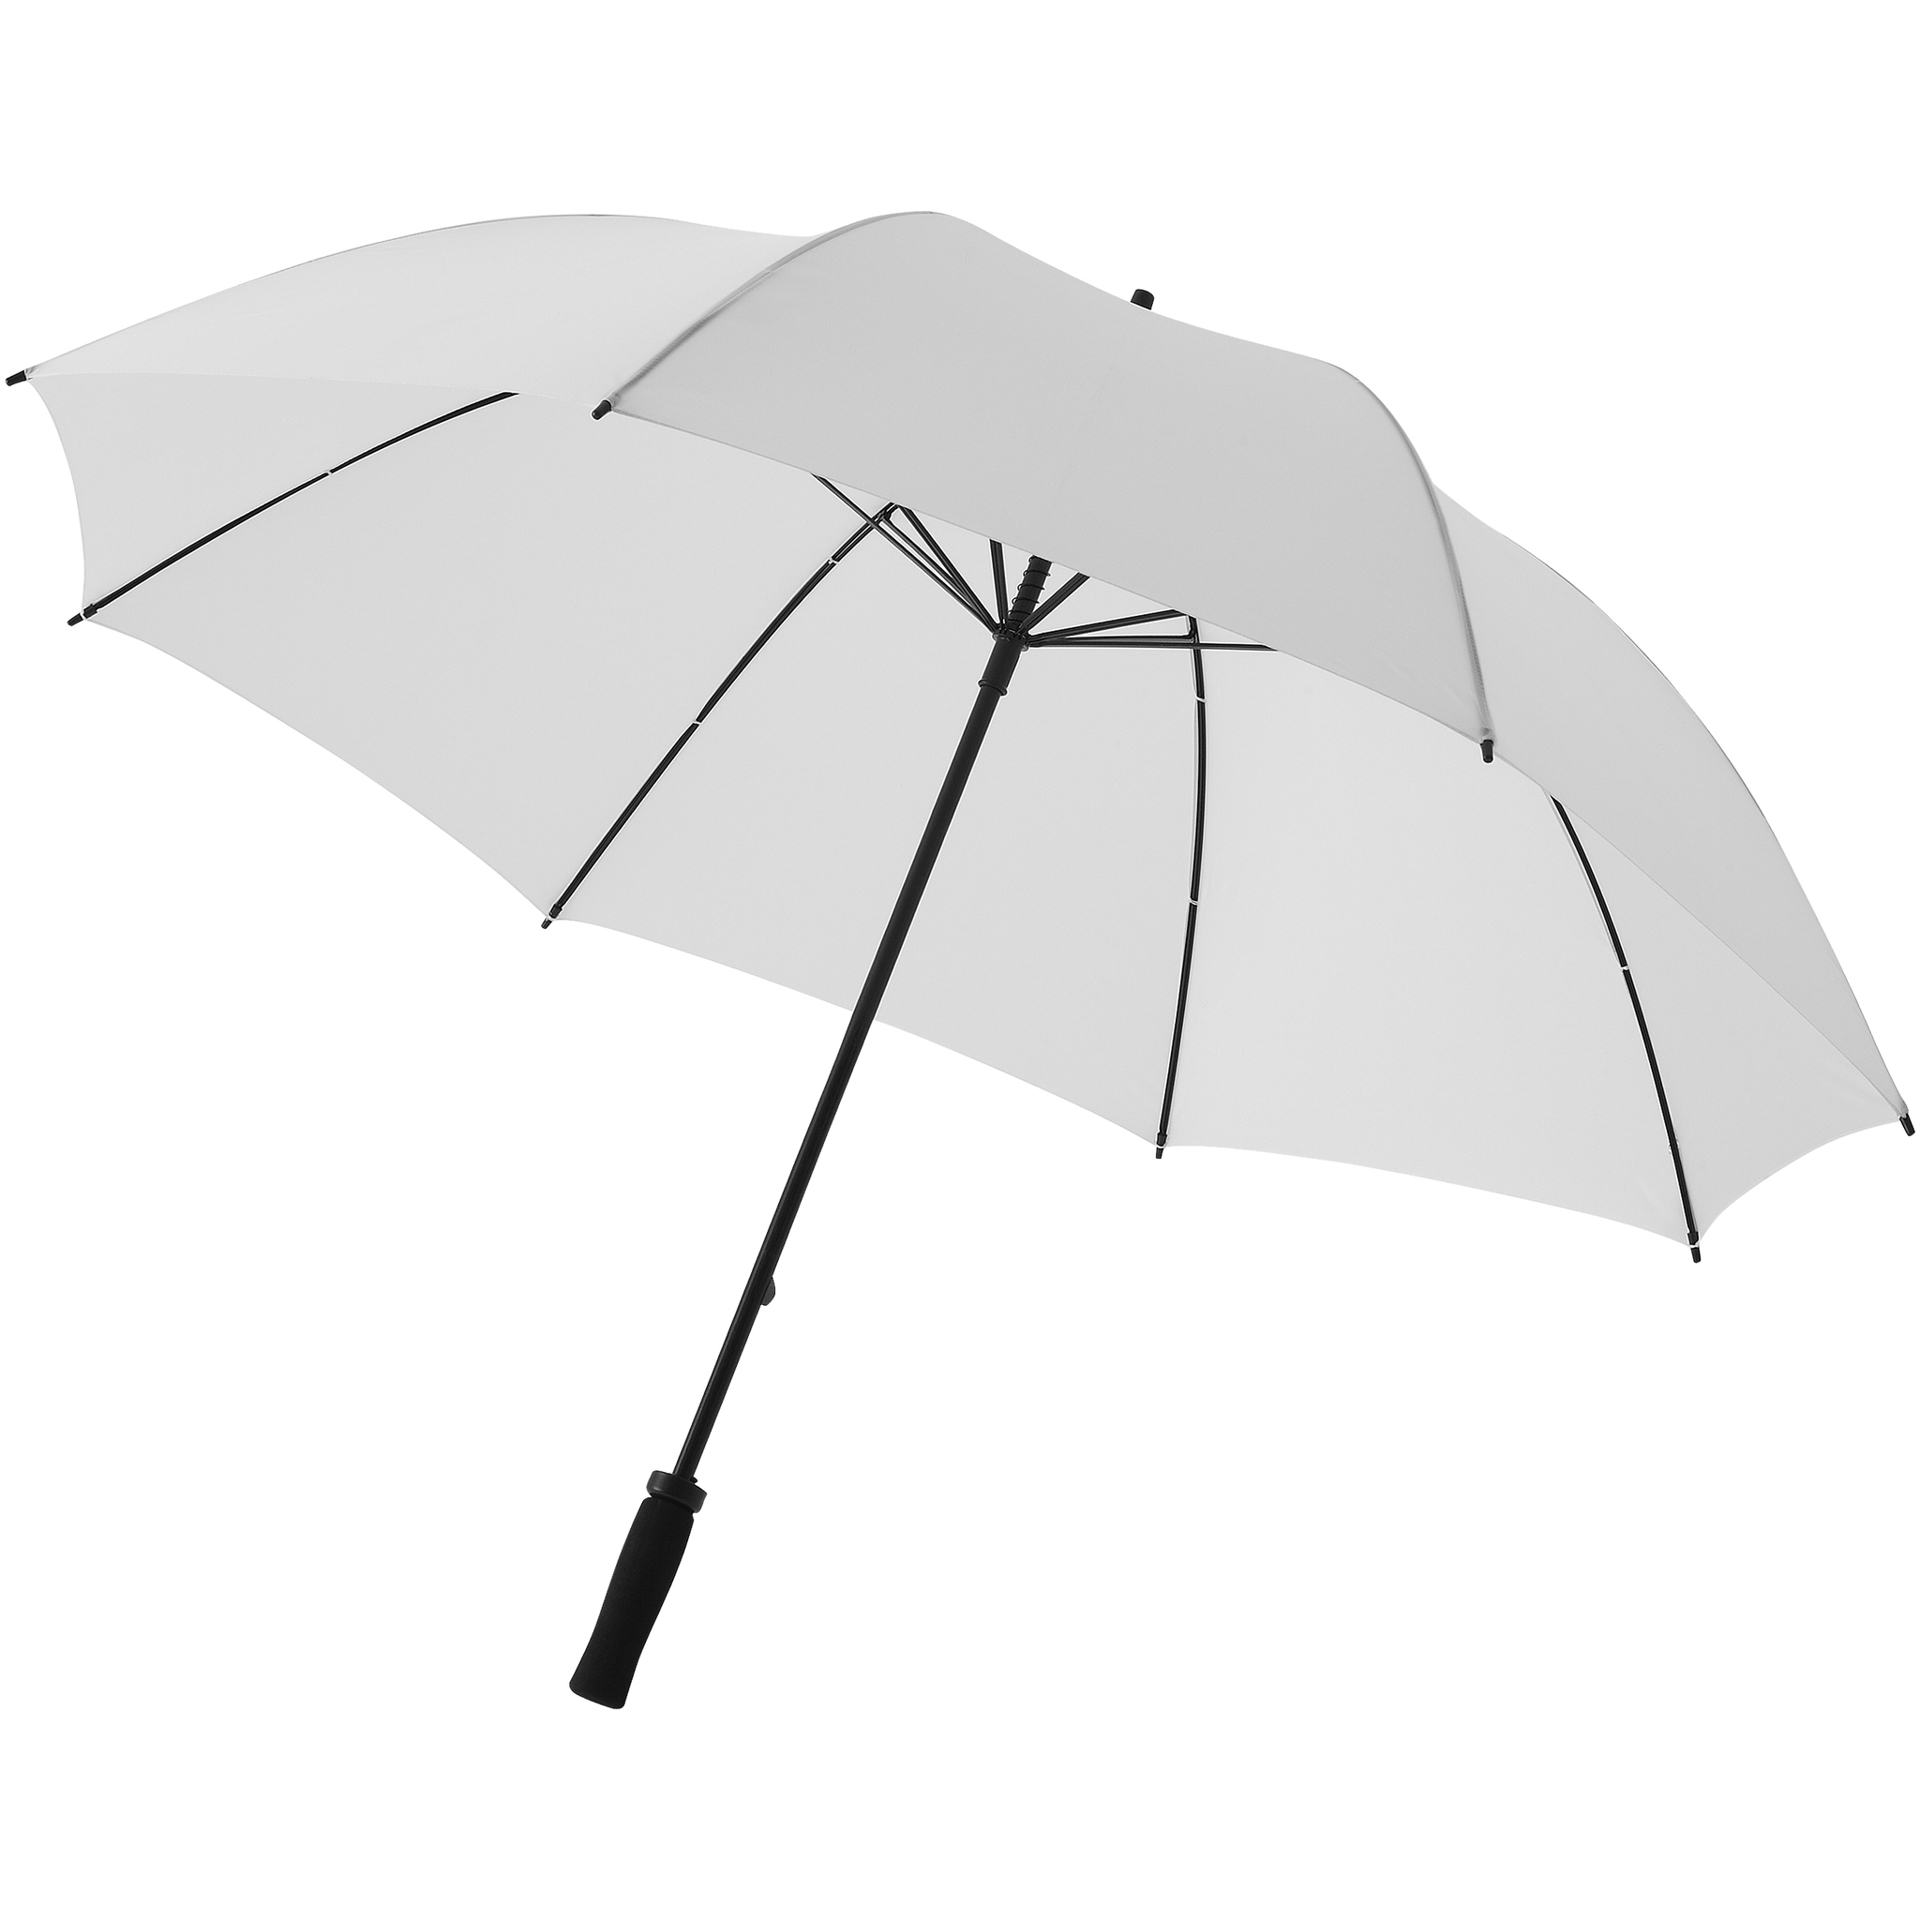 Storm Umbrella in white